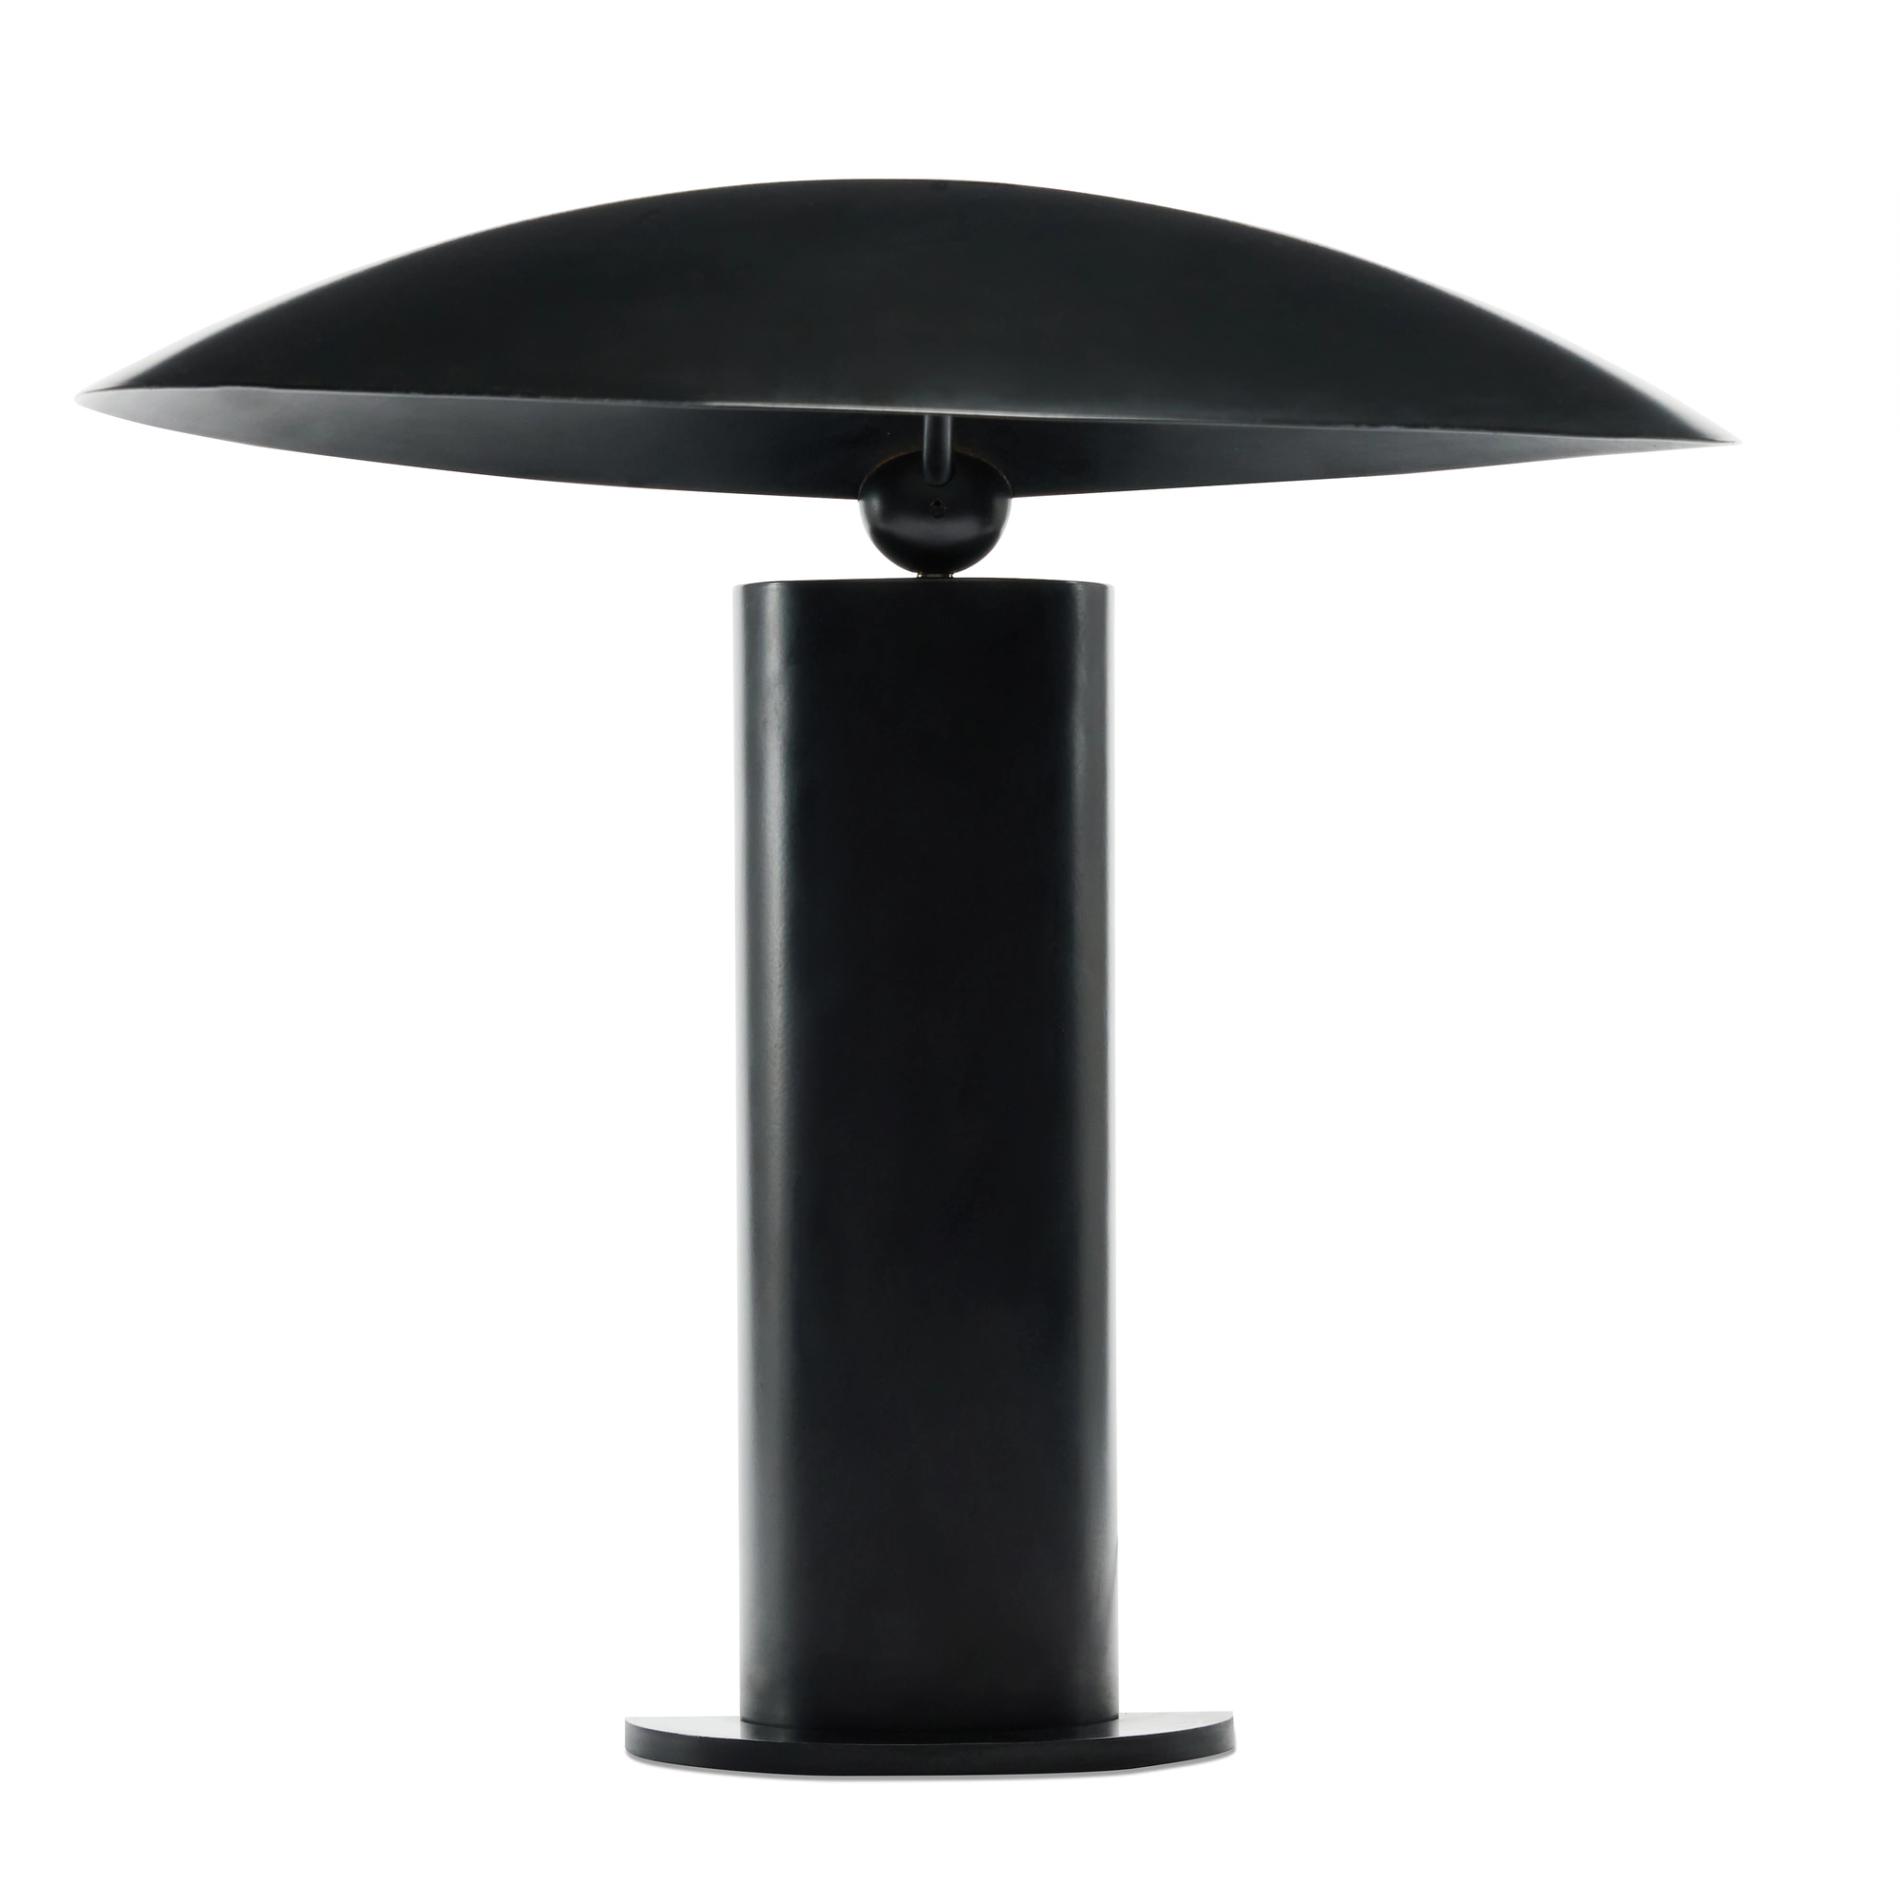 Jean-Michel Wilmotte, "Washington" Table Lamp, 1983